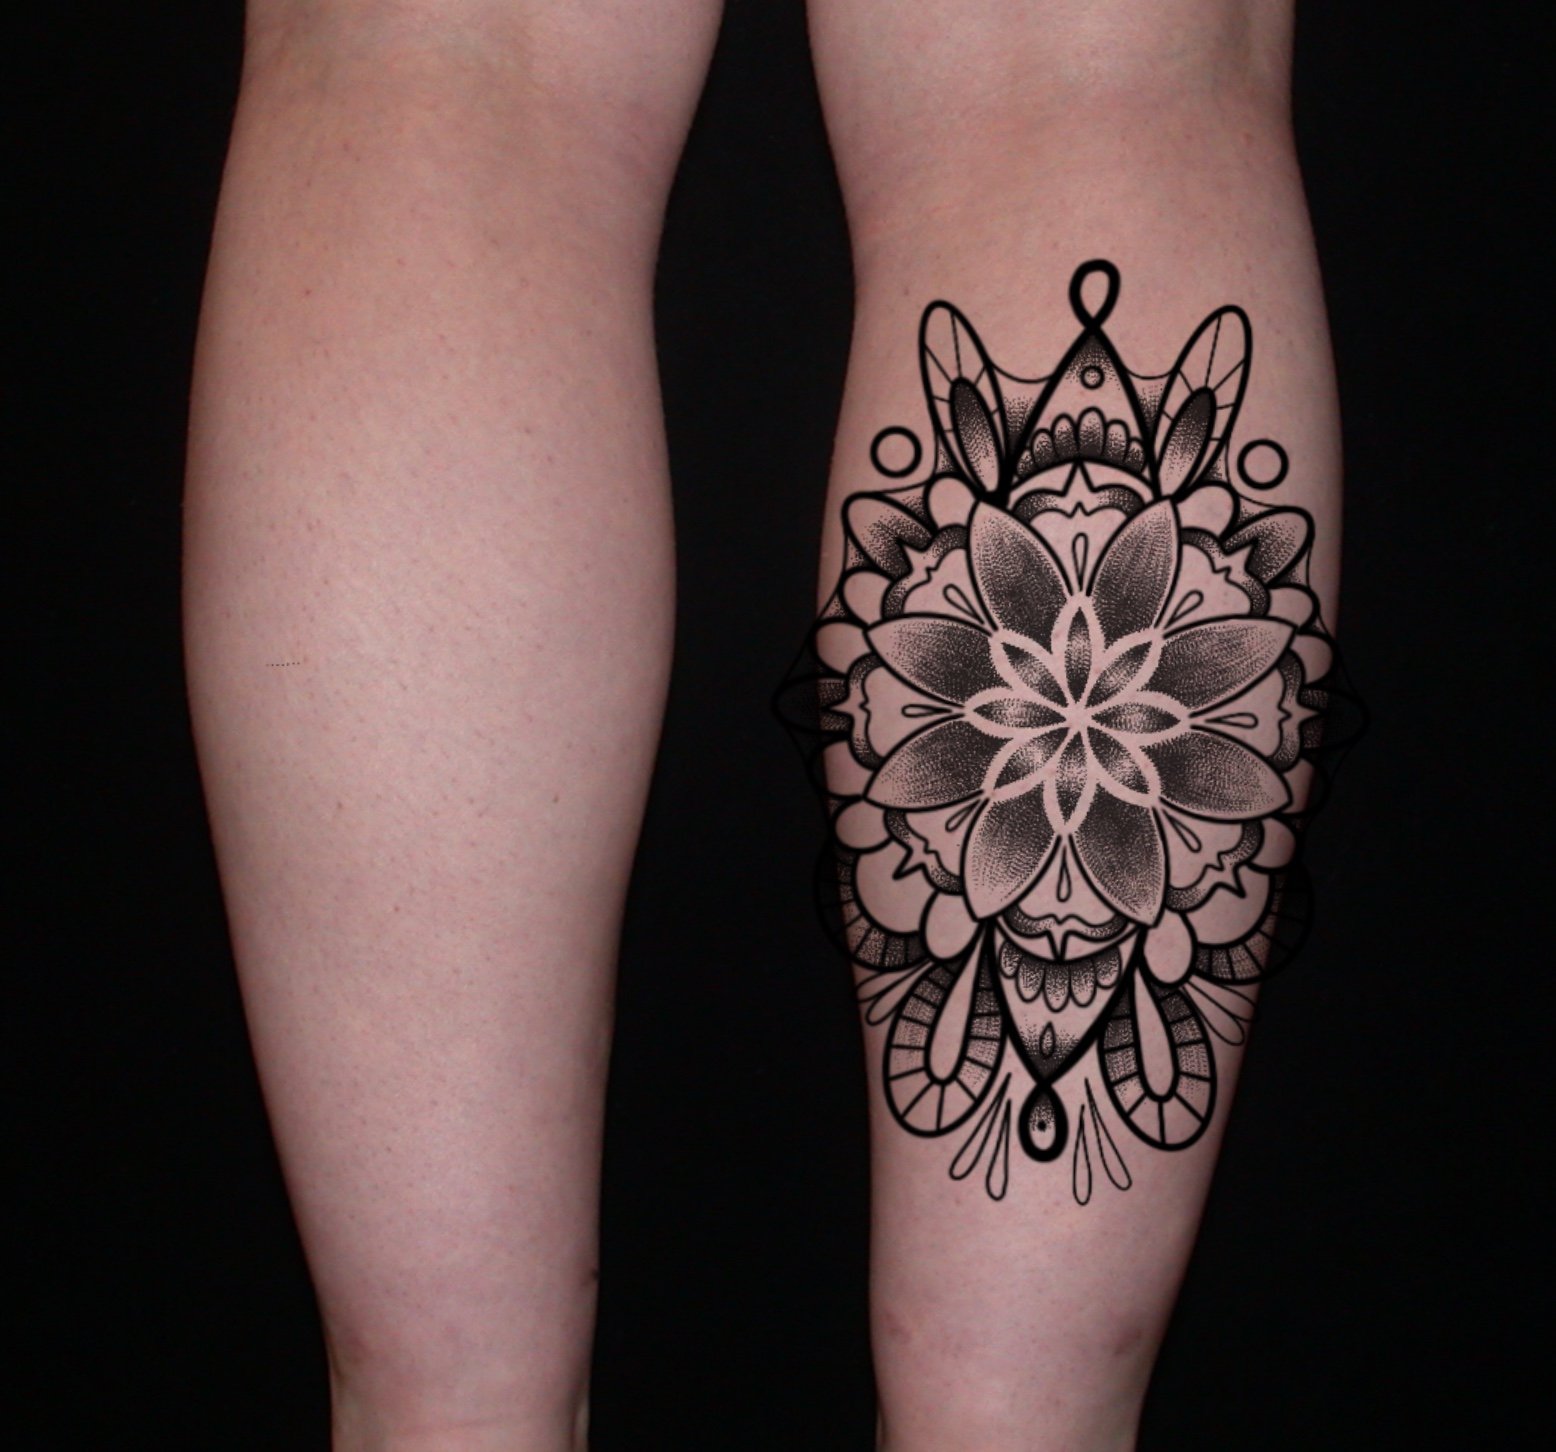 Awesome mandala arm tattoo done by Kevin!! #tattoos #tattoo #mandala |  Instagram